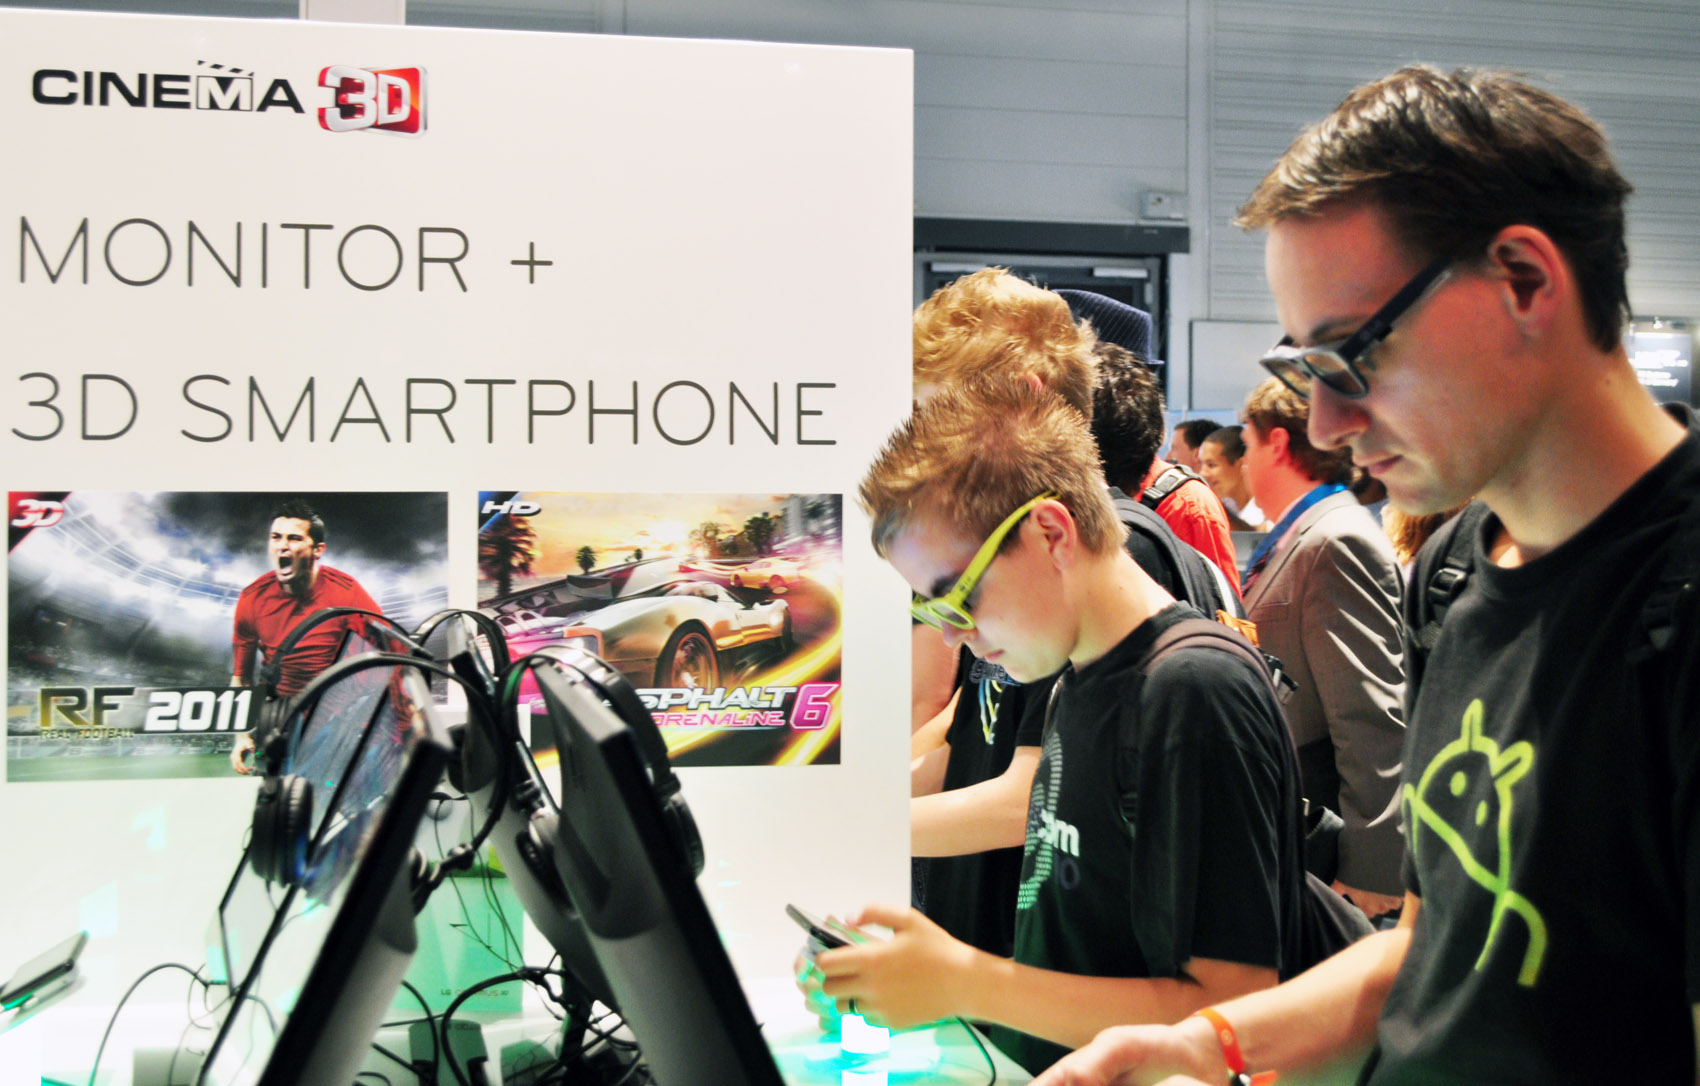 Visitors experiencing LG 3D smartphones at LG 3D Game Festival in Gamescom